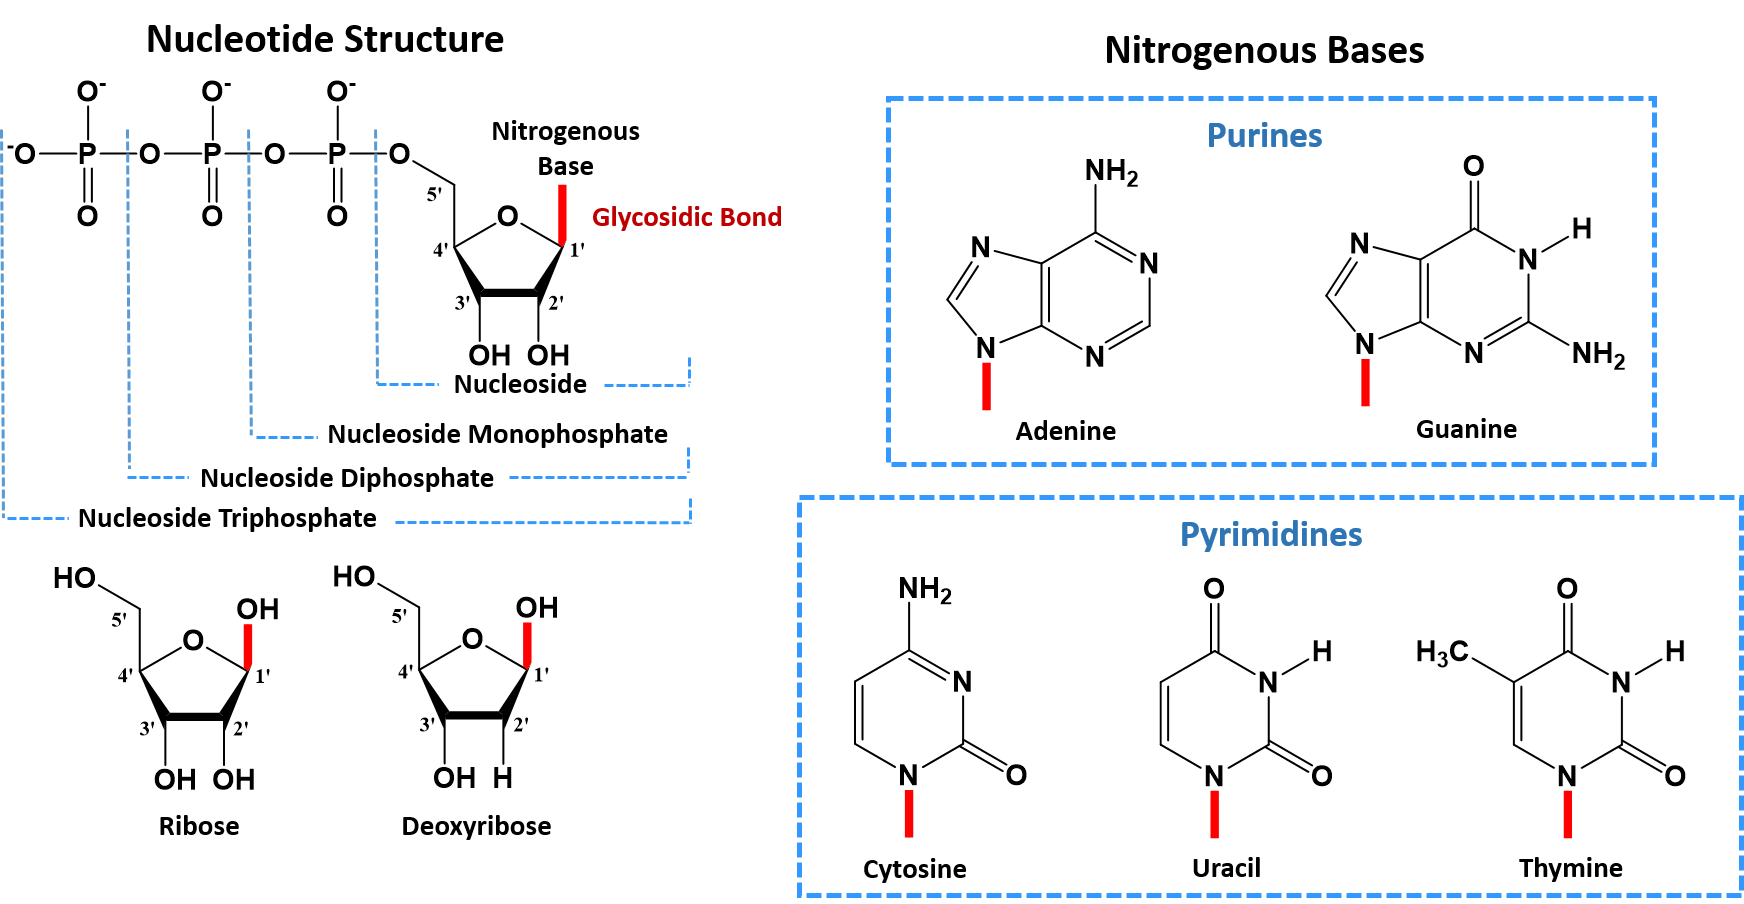 rna nucleotide diagram